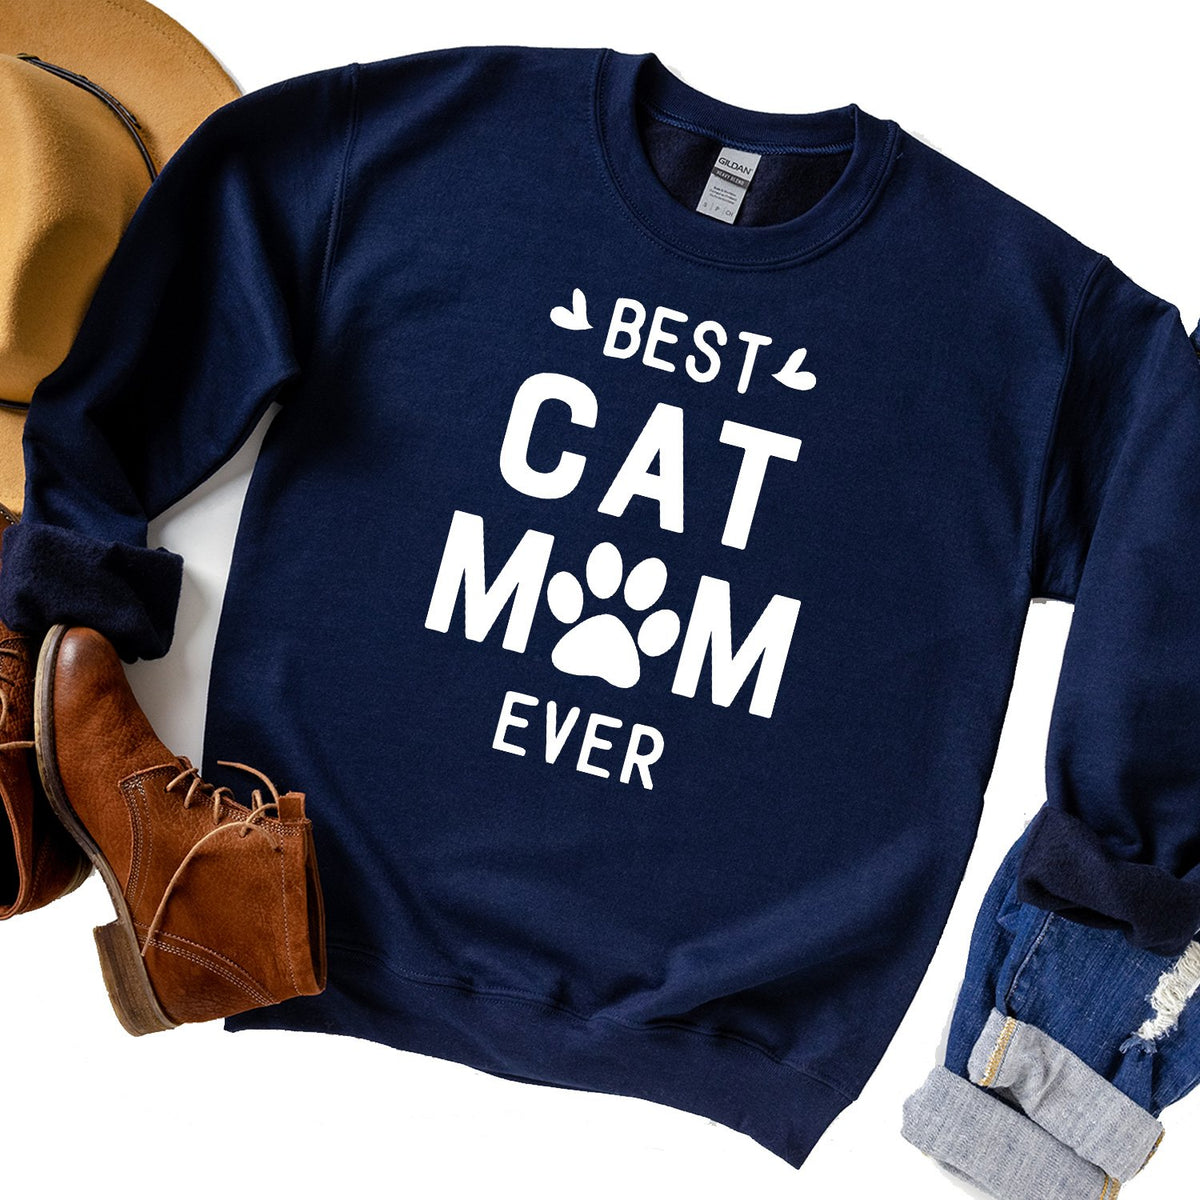 Best Cat Mom Ever - Long Sleeve Heavy Crewneck Sweatshirt